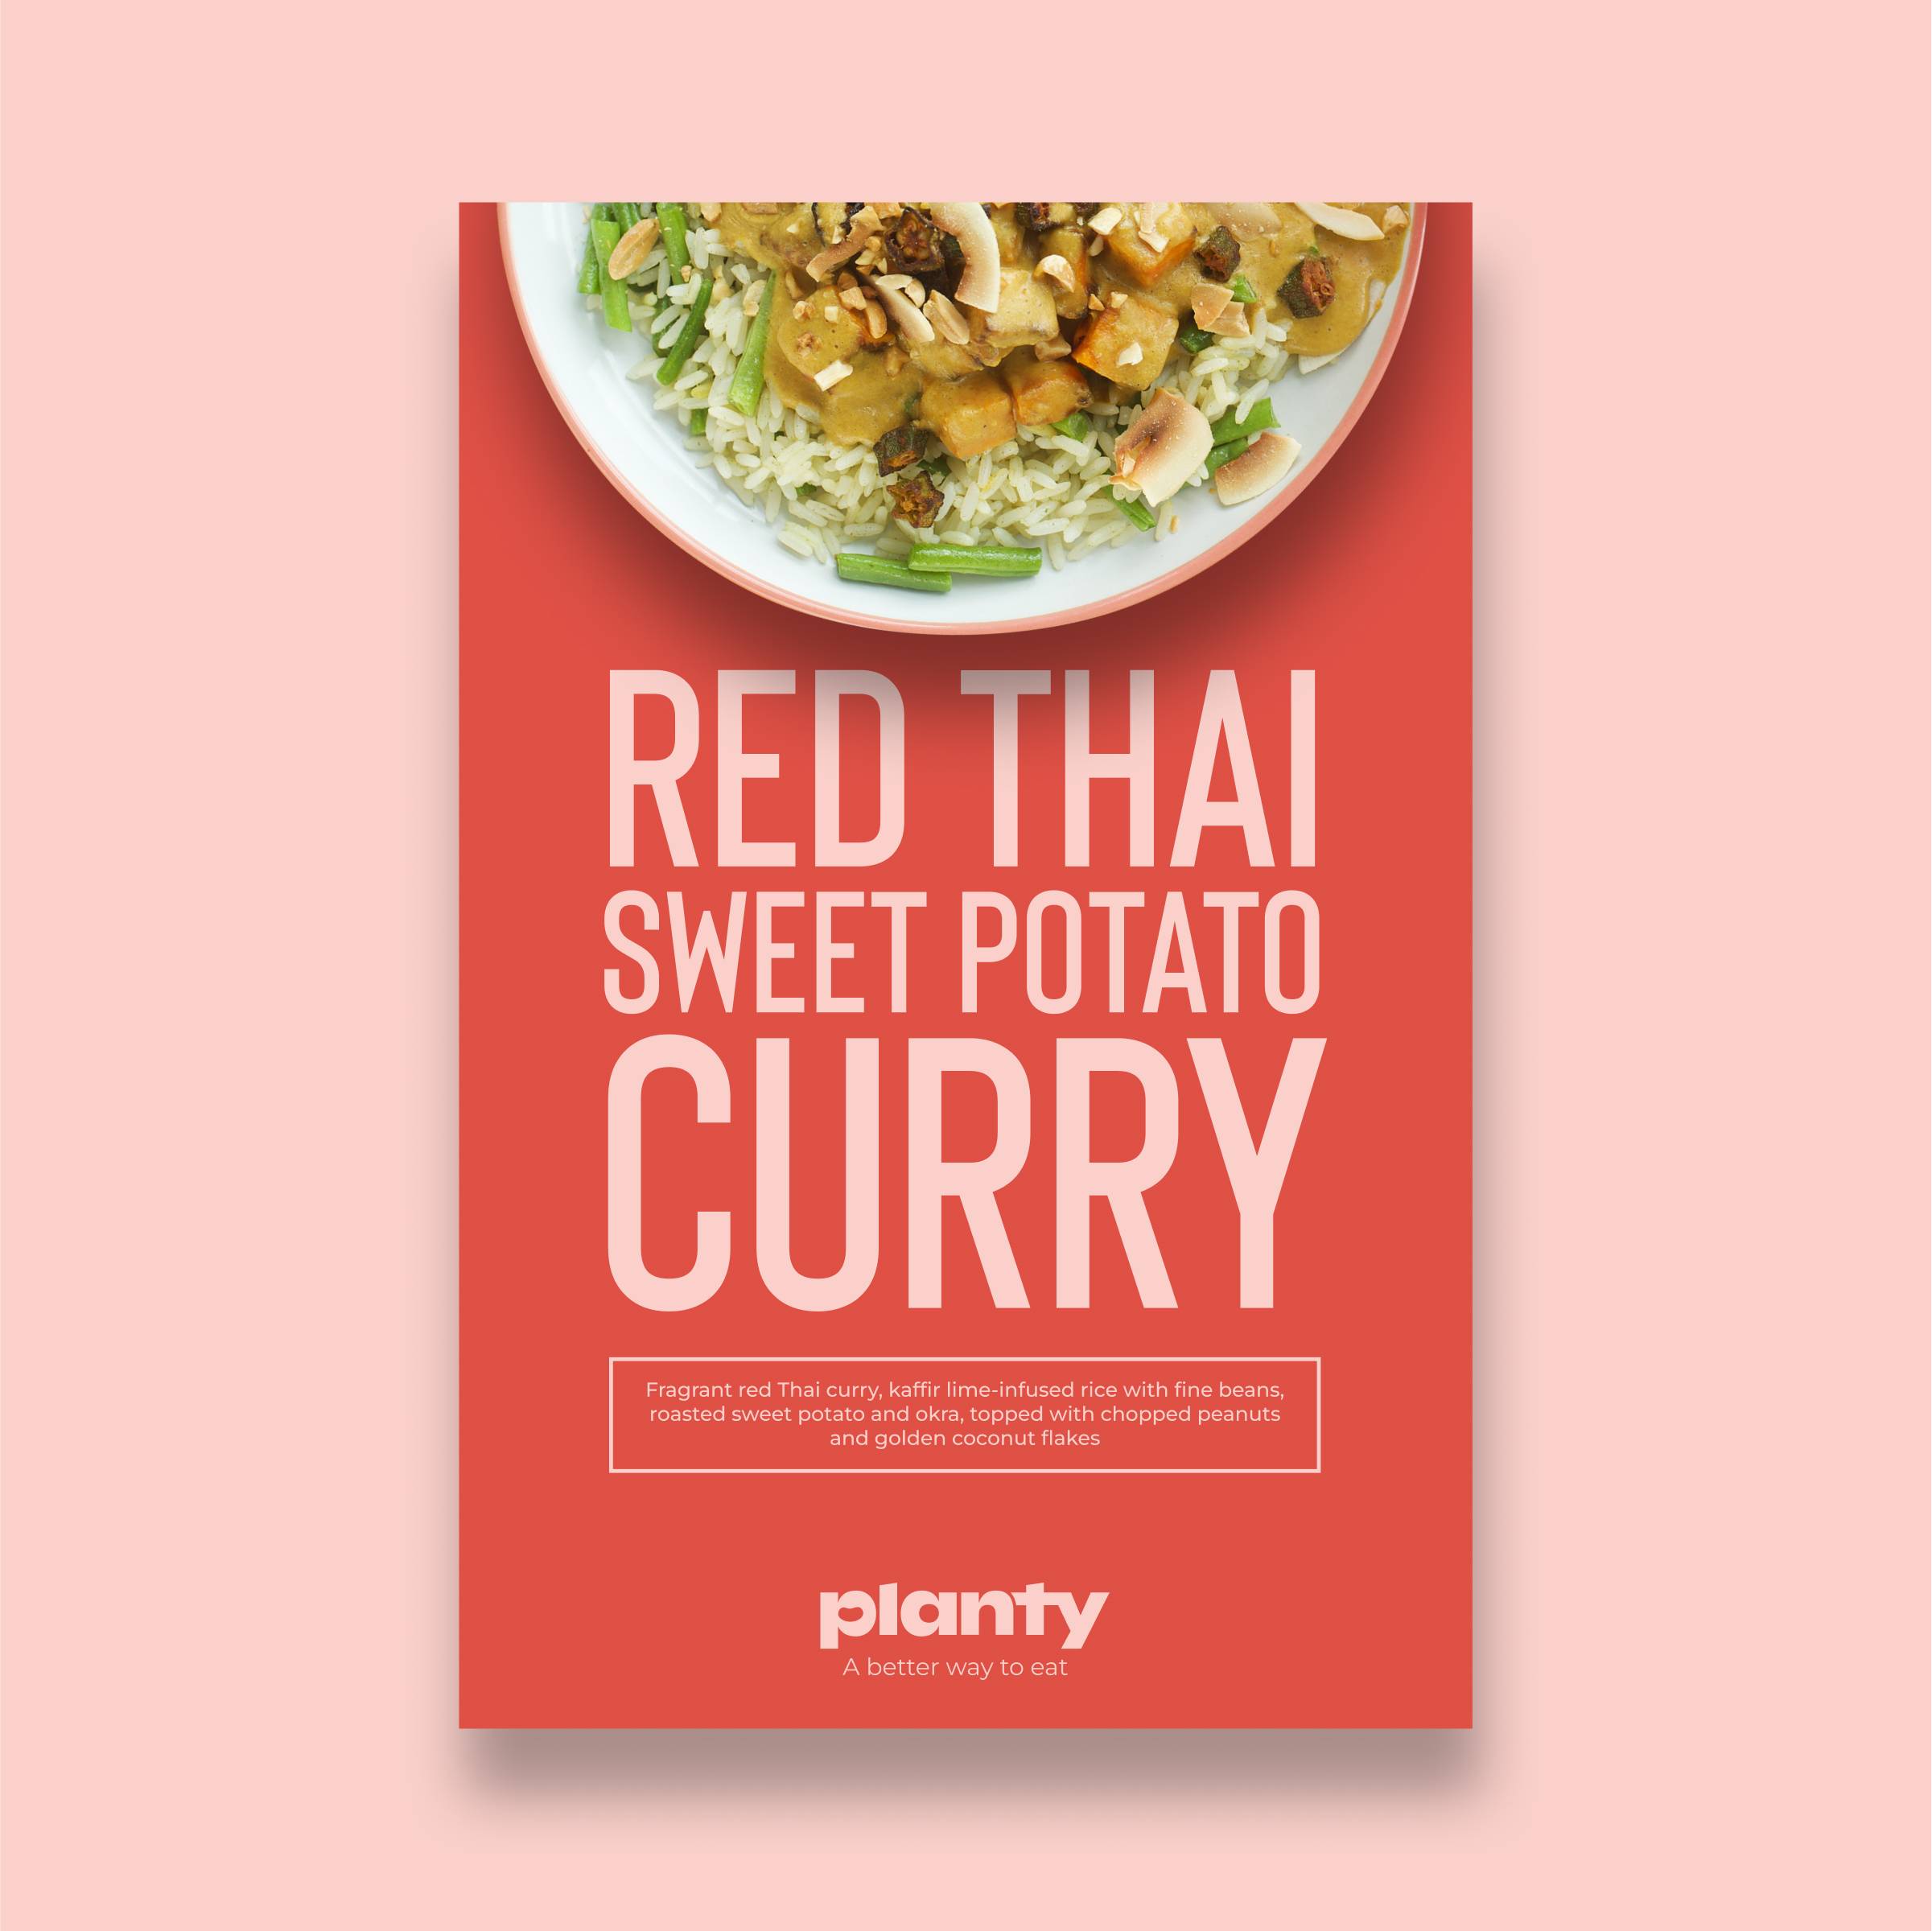 Red Thai Sweet Potato Curry image 2